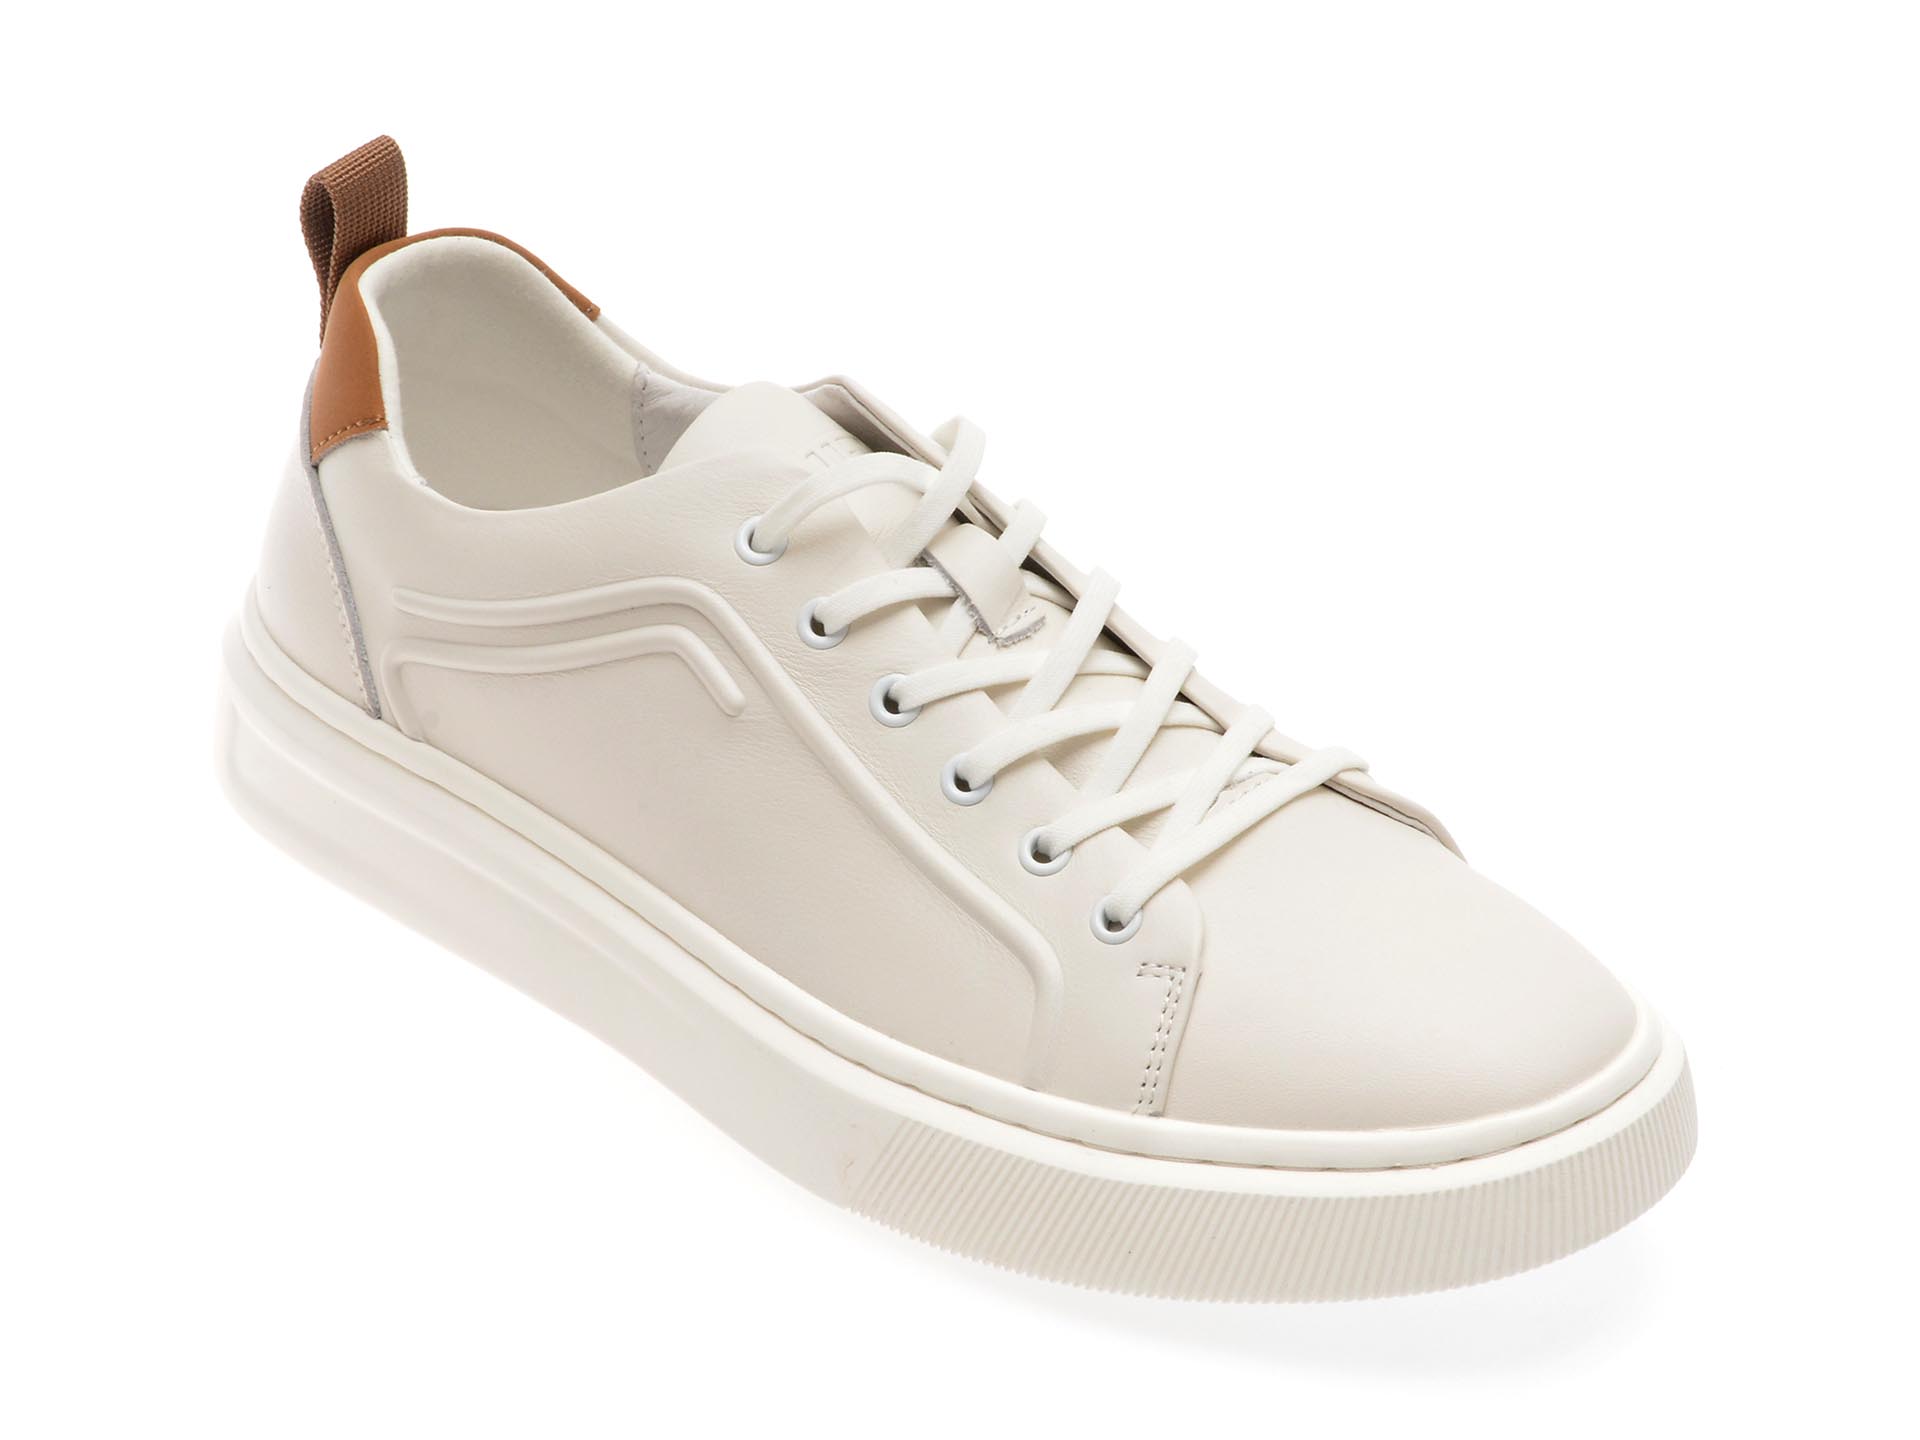 Pantofi casual OTTER albi, 3321, din piele naturala